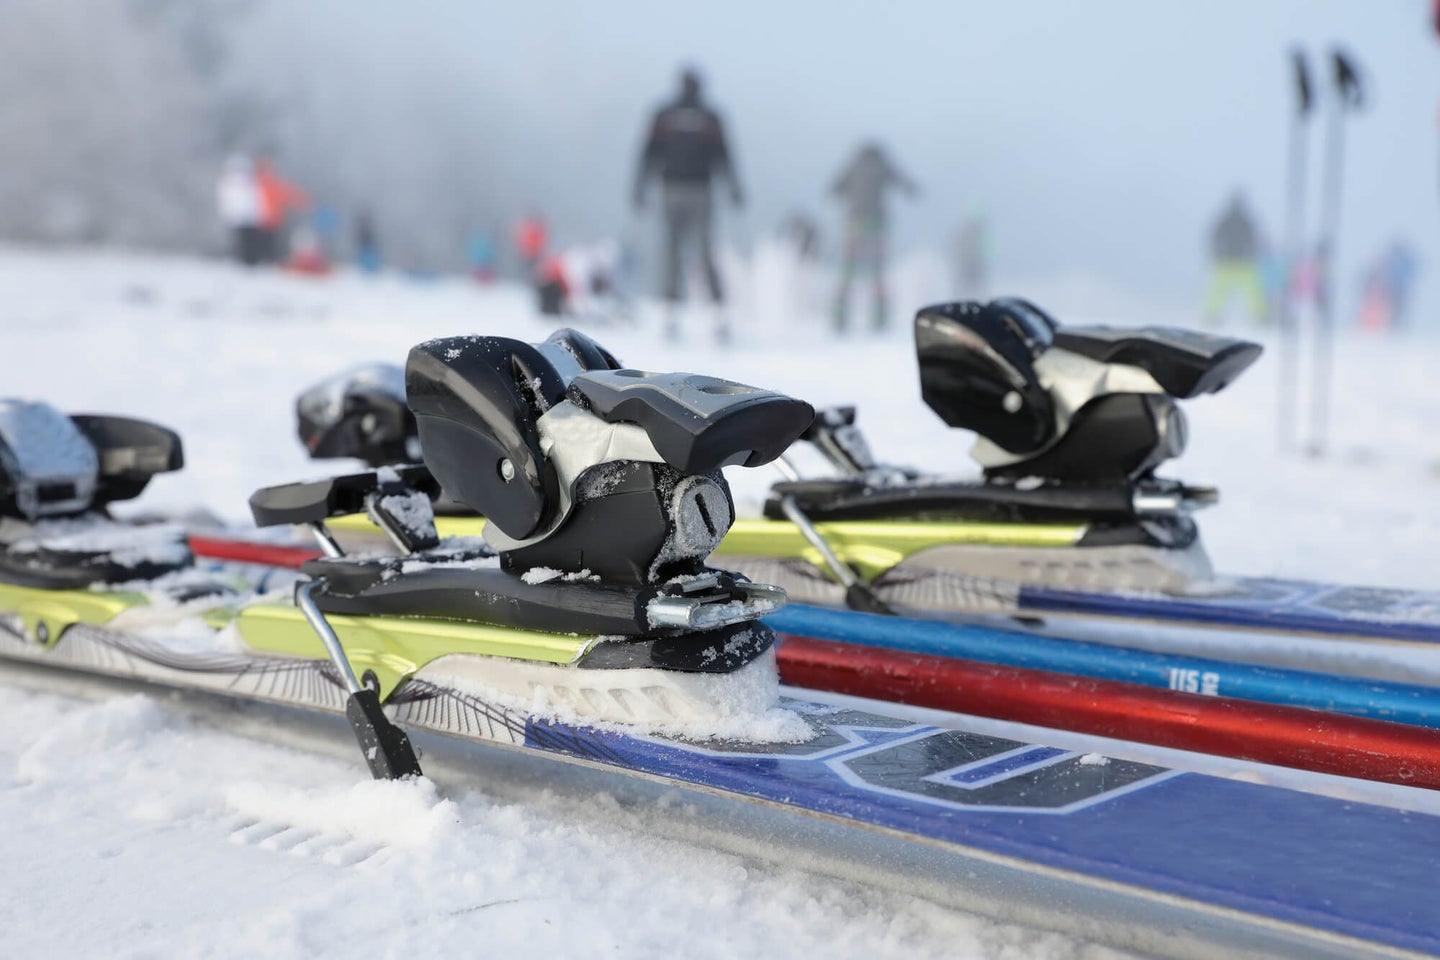 Best AT Bindings: Enjoy Skiing Even More